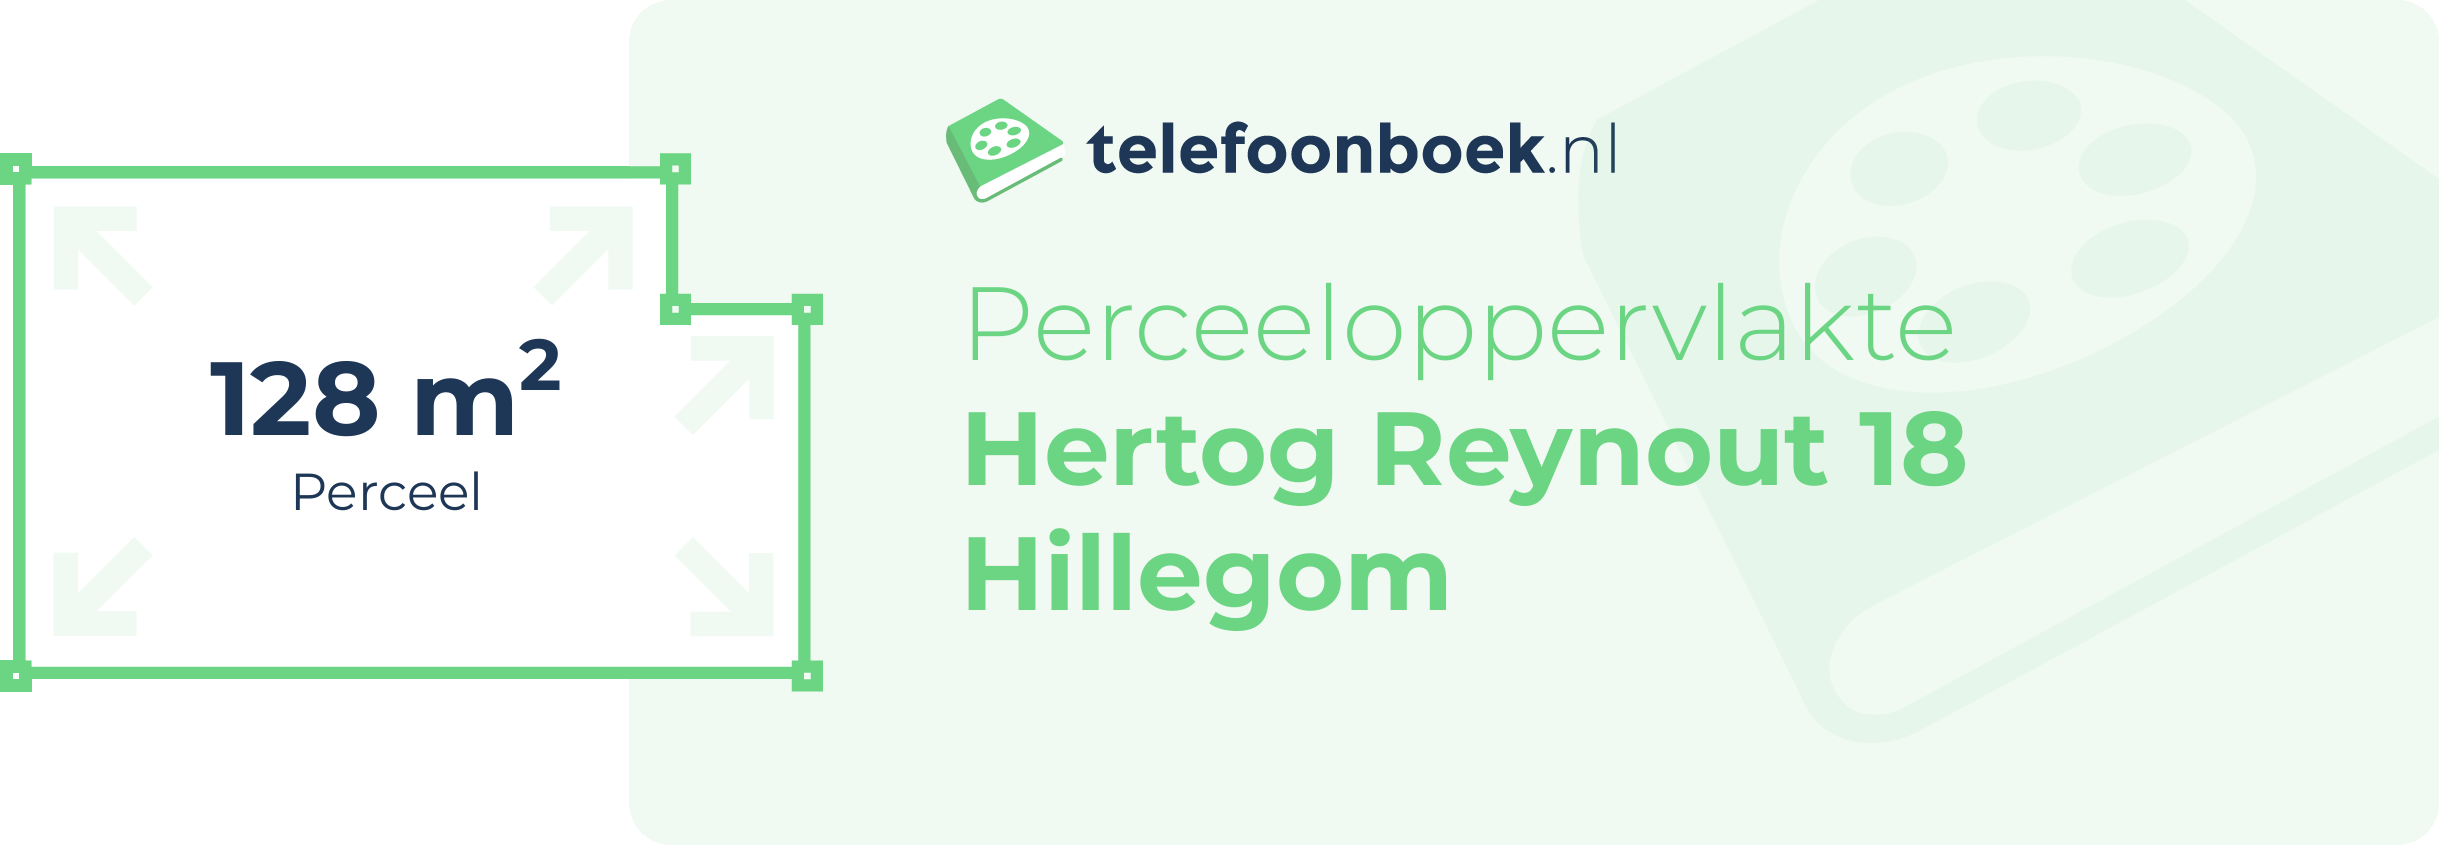 Perceeloppervlakte Hertog Reynout 18 Hillegom